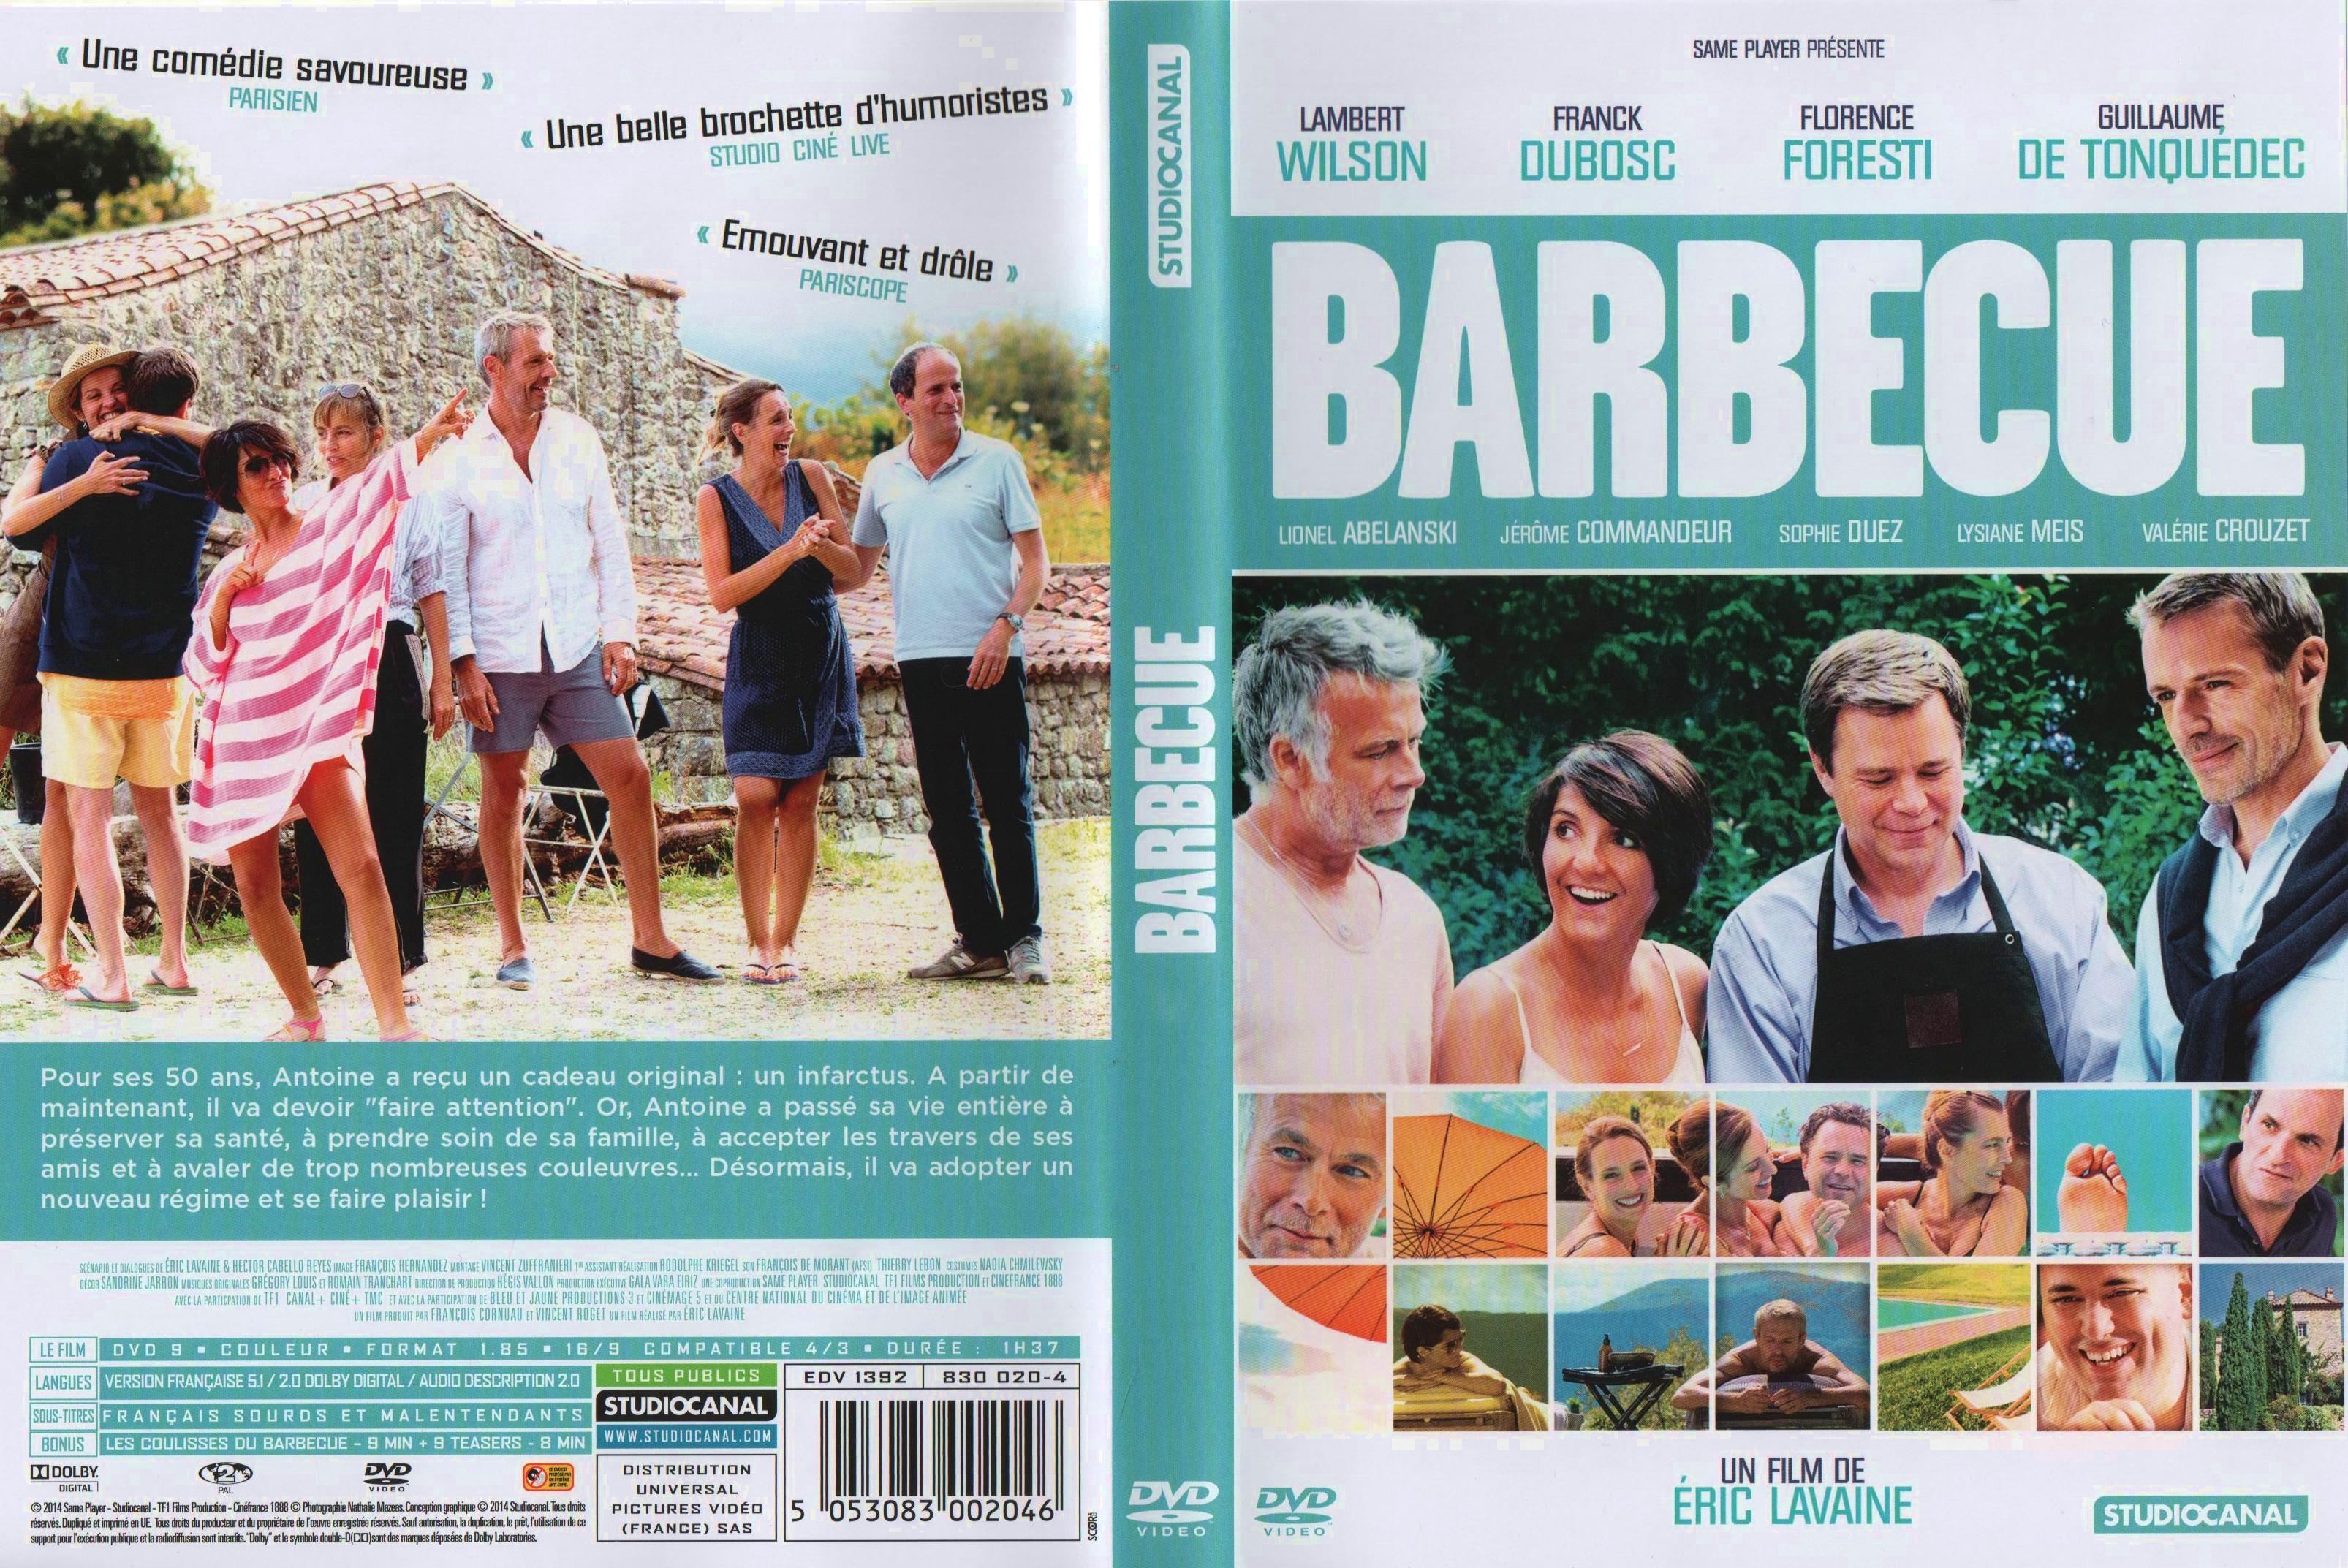 Jaquette DVD Barbecue